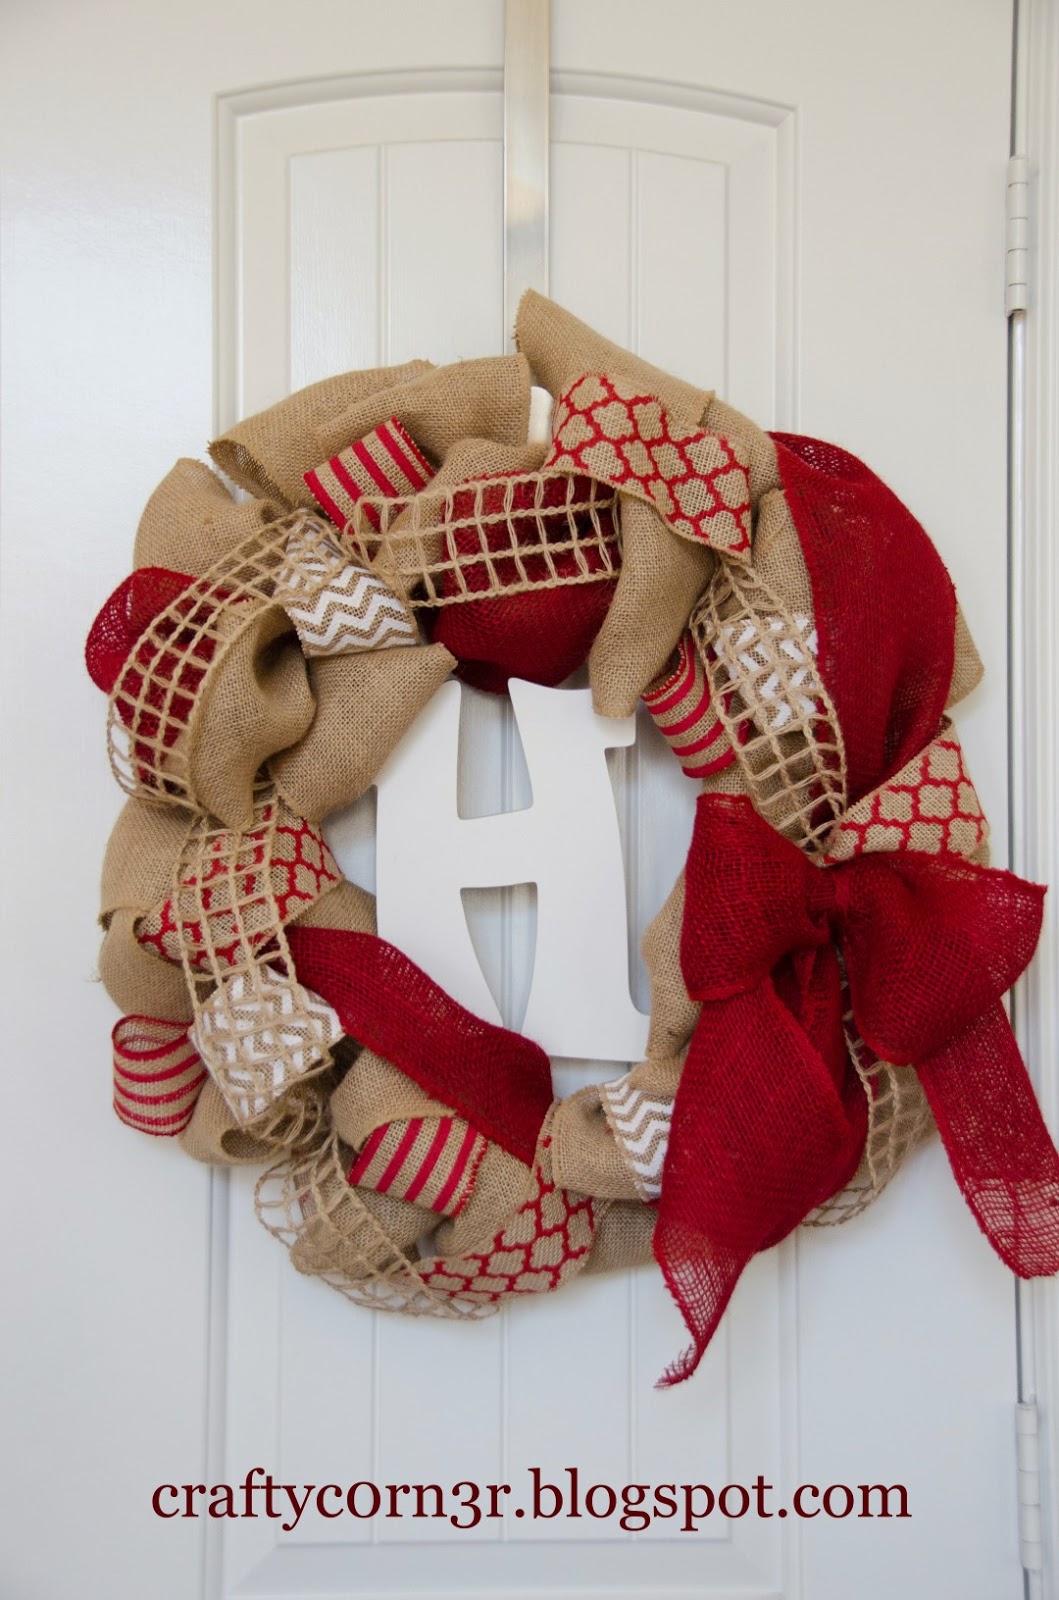 http://craftyc0rn3r.blogspot.com/2014/11/how-to-make-burlap-wreath.html